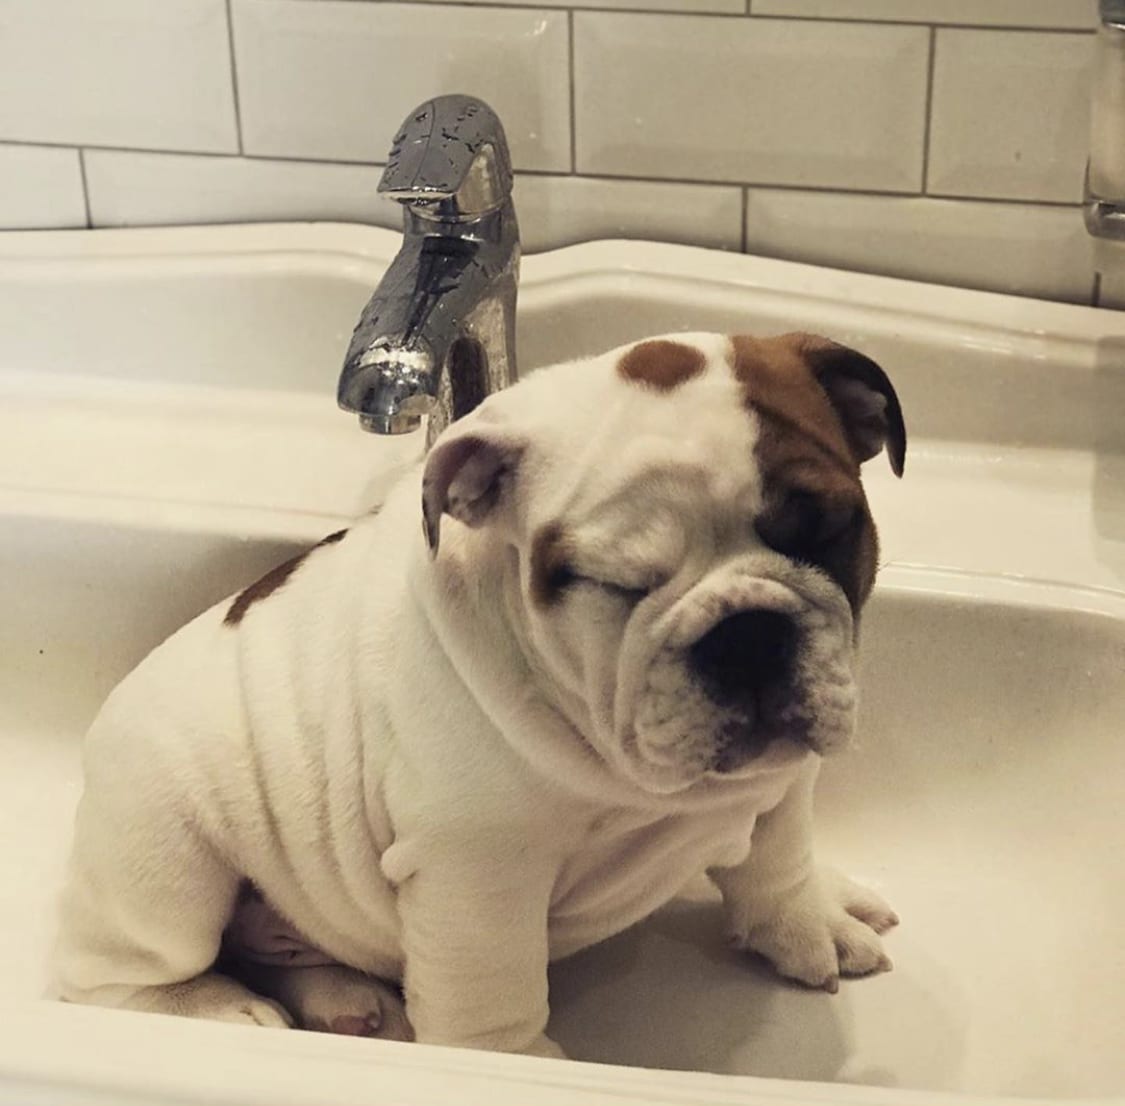 A English Bulldog sleeping in the sink